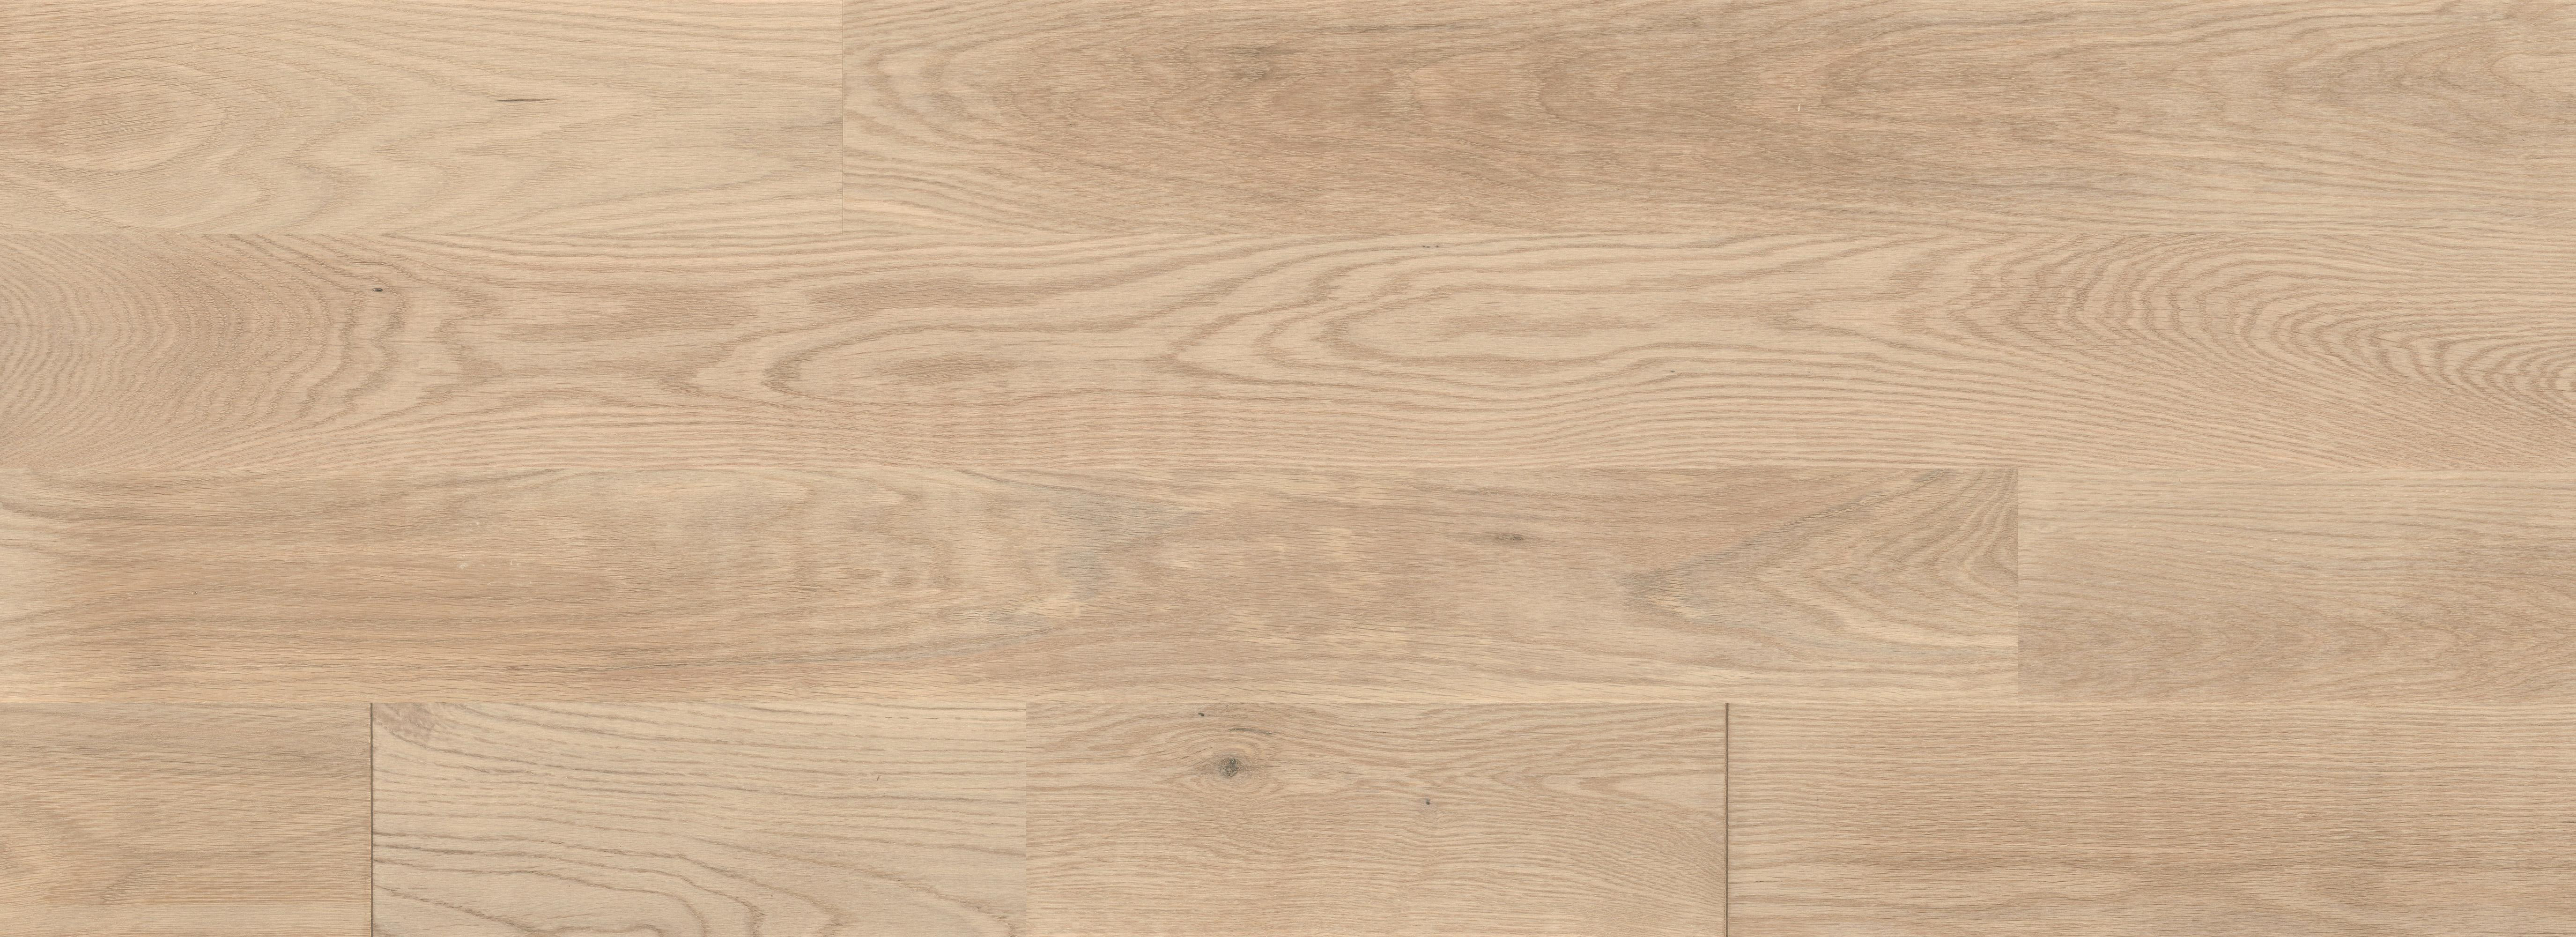 solid hardwood flooring canada of mullican castillian oak glacier 5 wide solid hardwood flooring for oak glacier castillian 5 x 55 horizontal